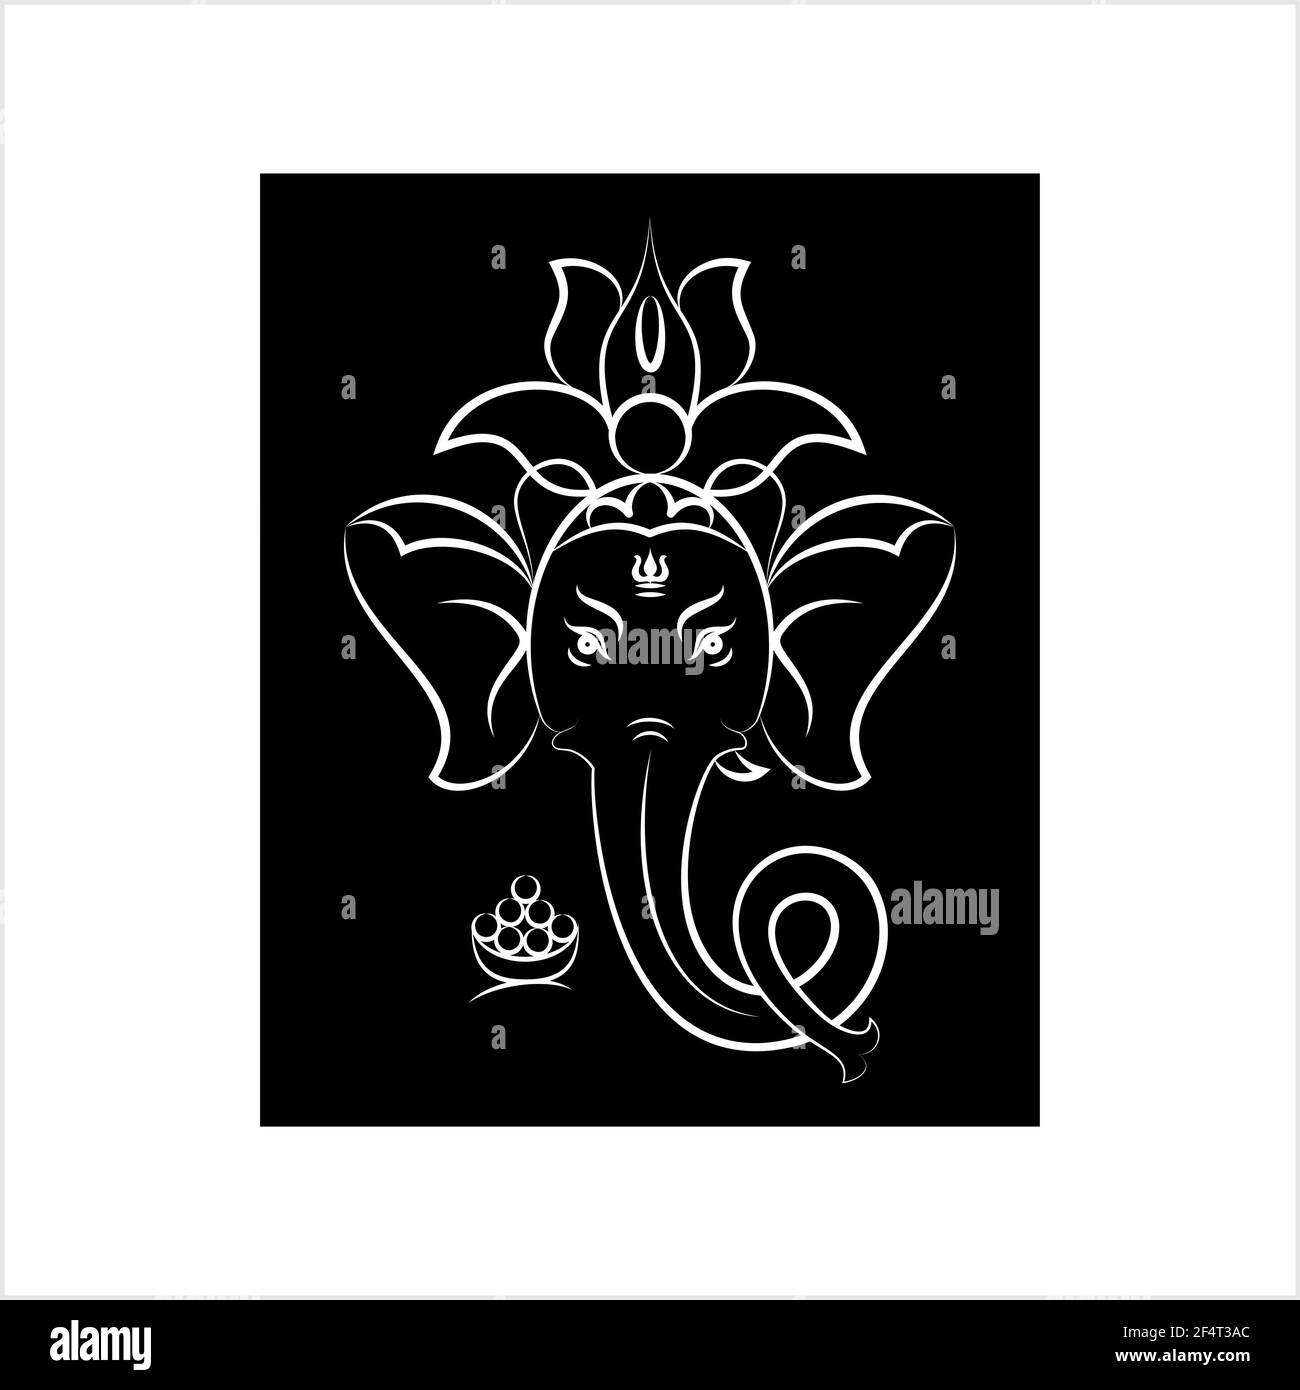 Ganesha The Lord Of Wisdom Design Vector Art Illustration Stock Vector